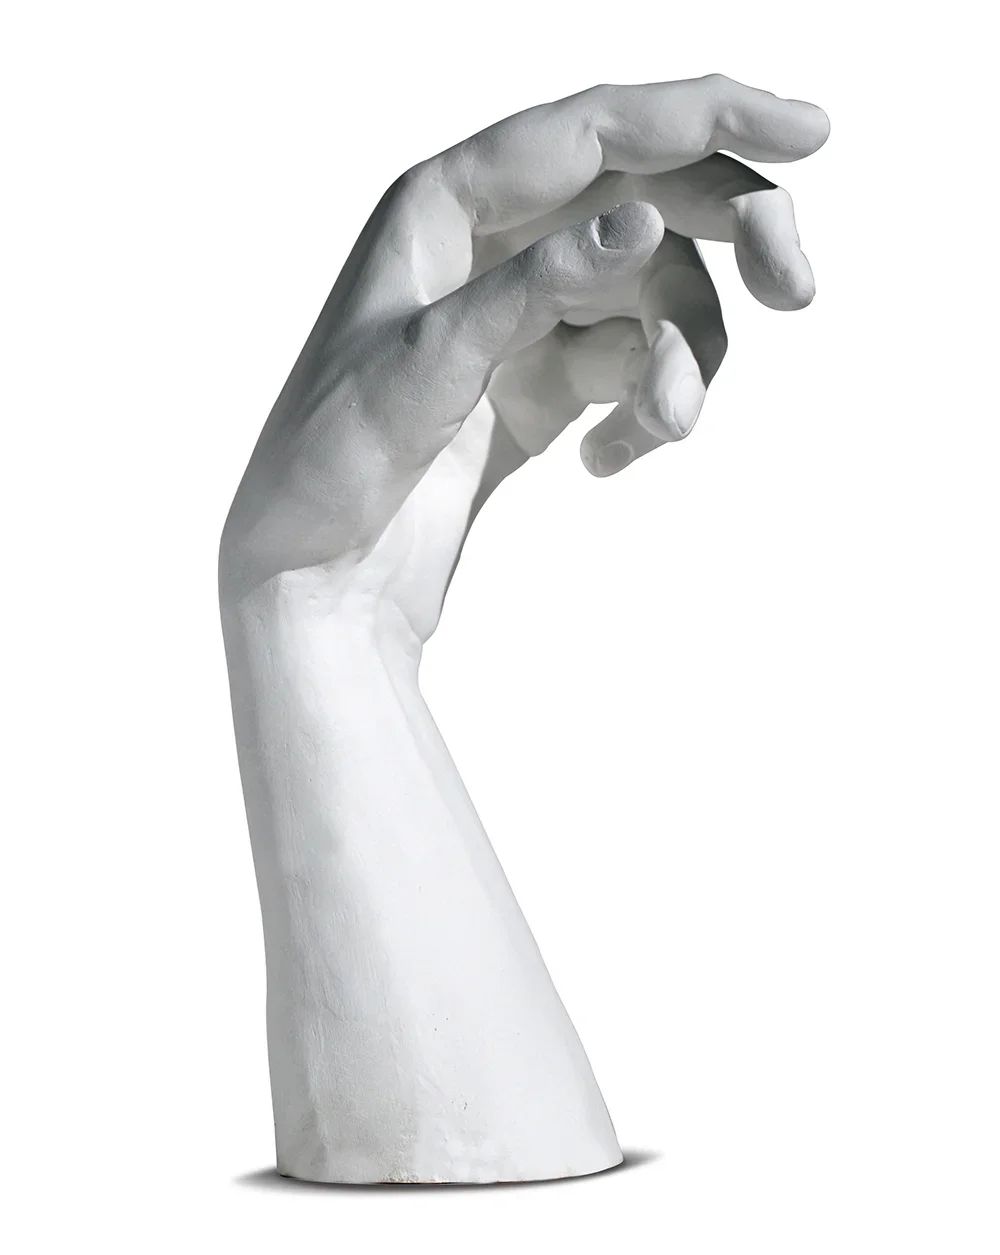 Леонид Ким (Скульптура - 
                  25 x 34 см) Арт-объект "Мужская рука"